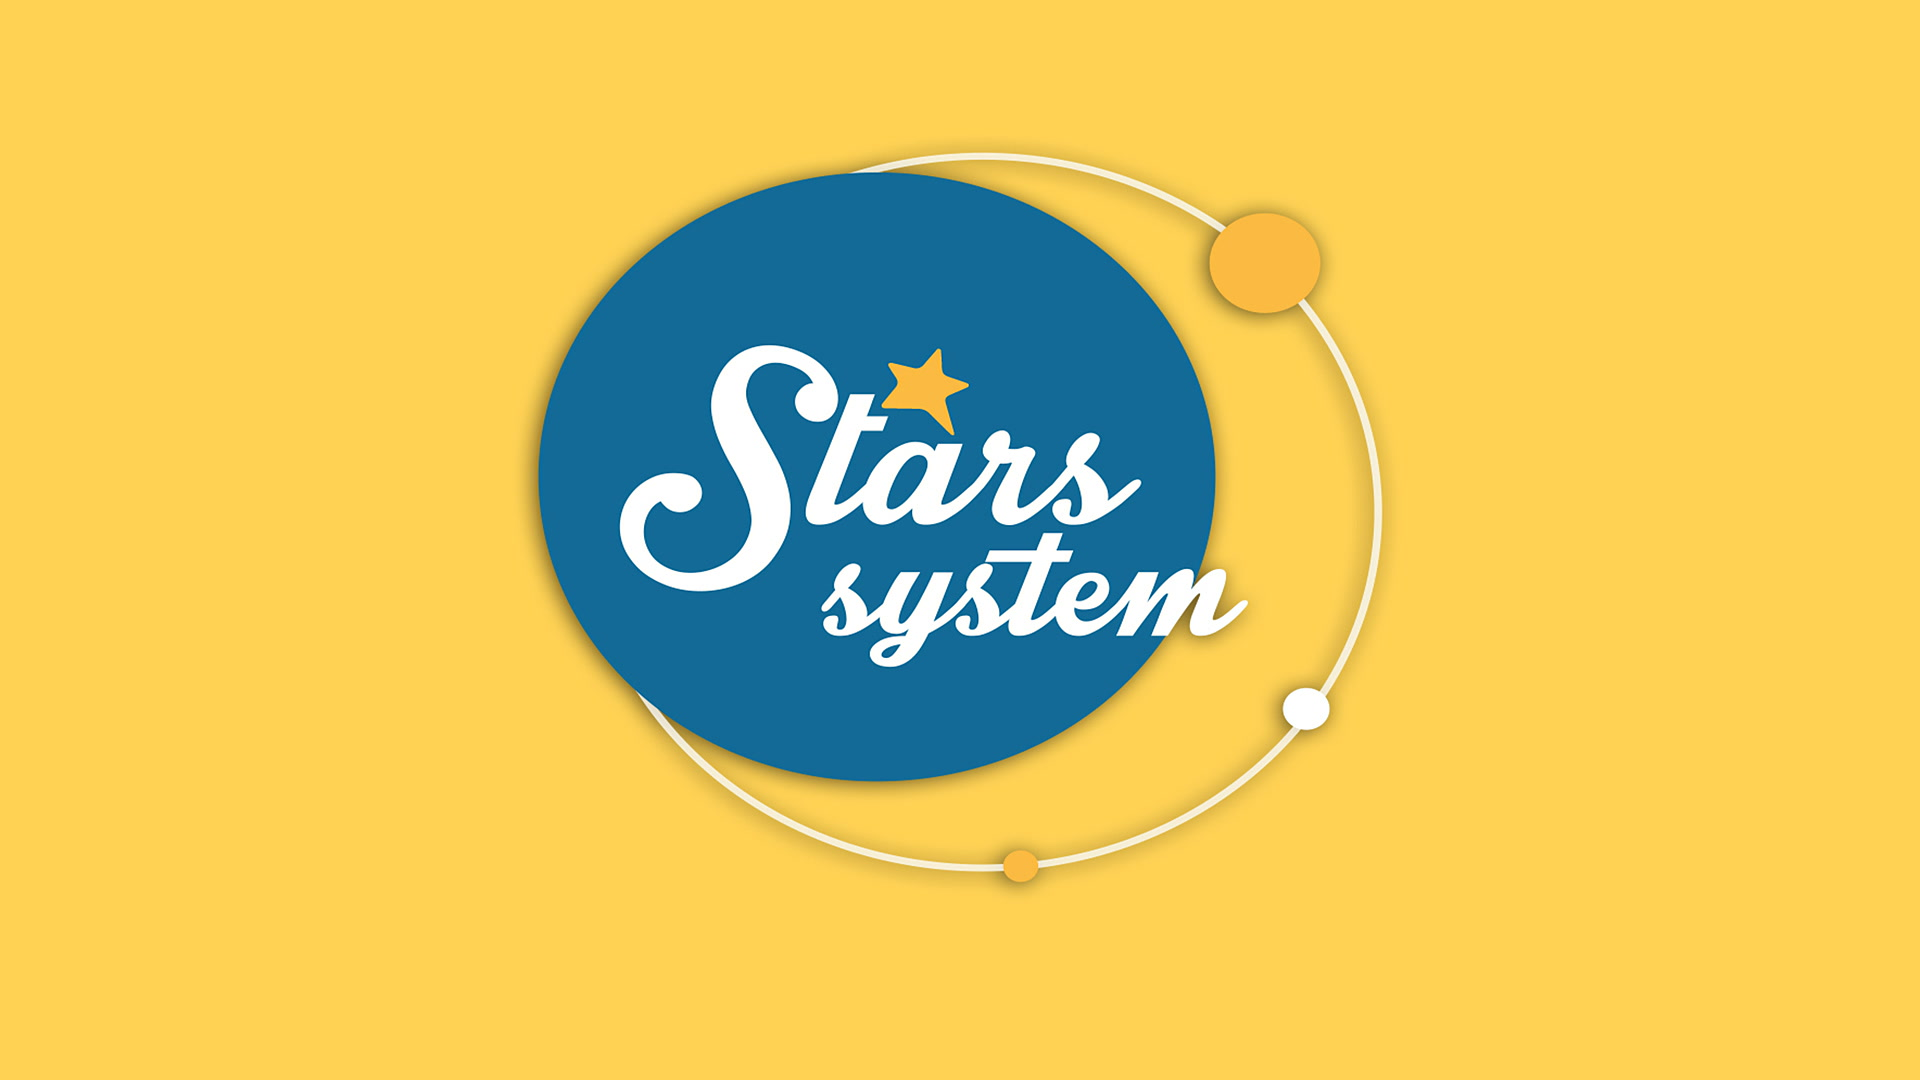 Stars System